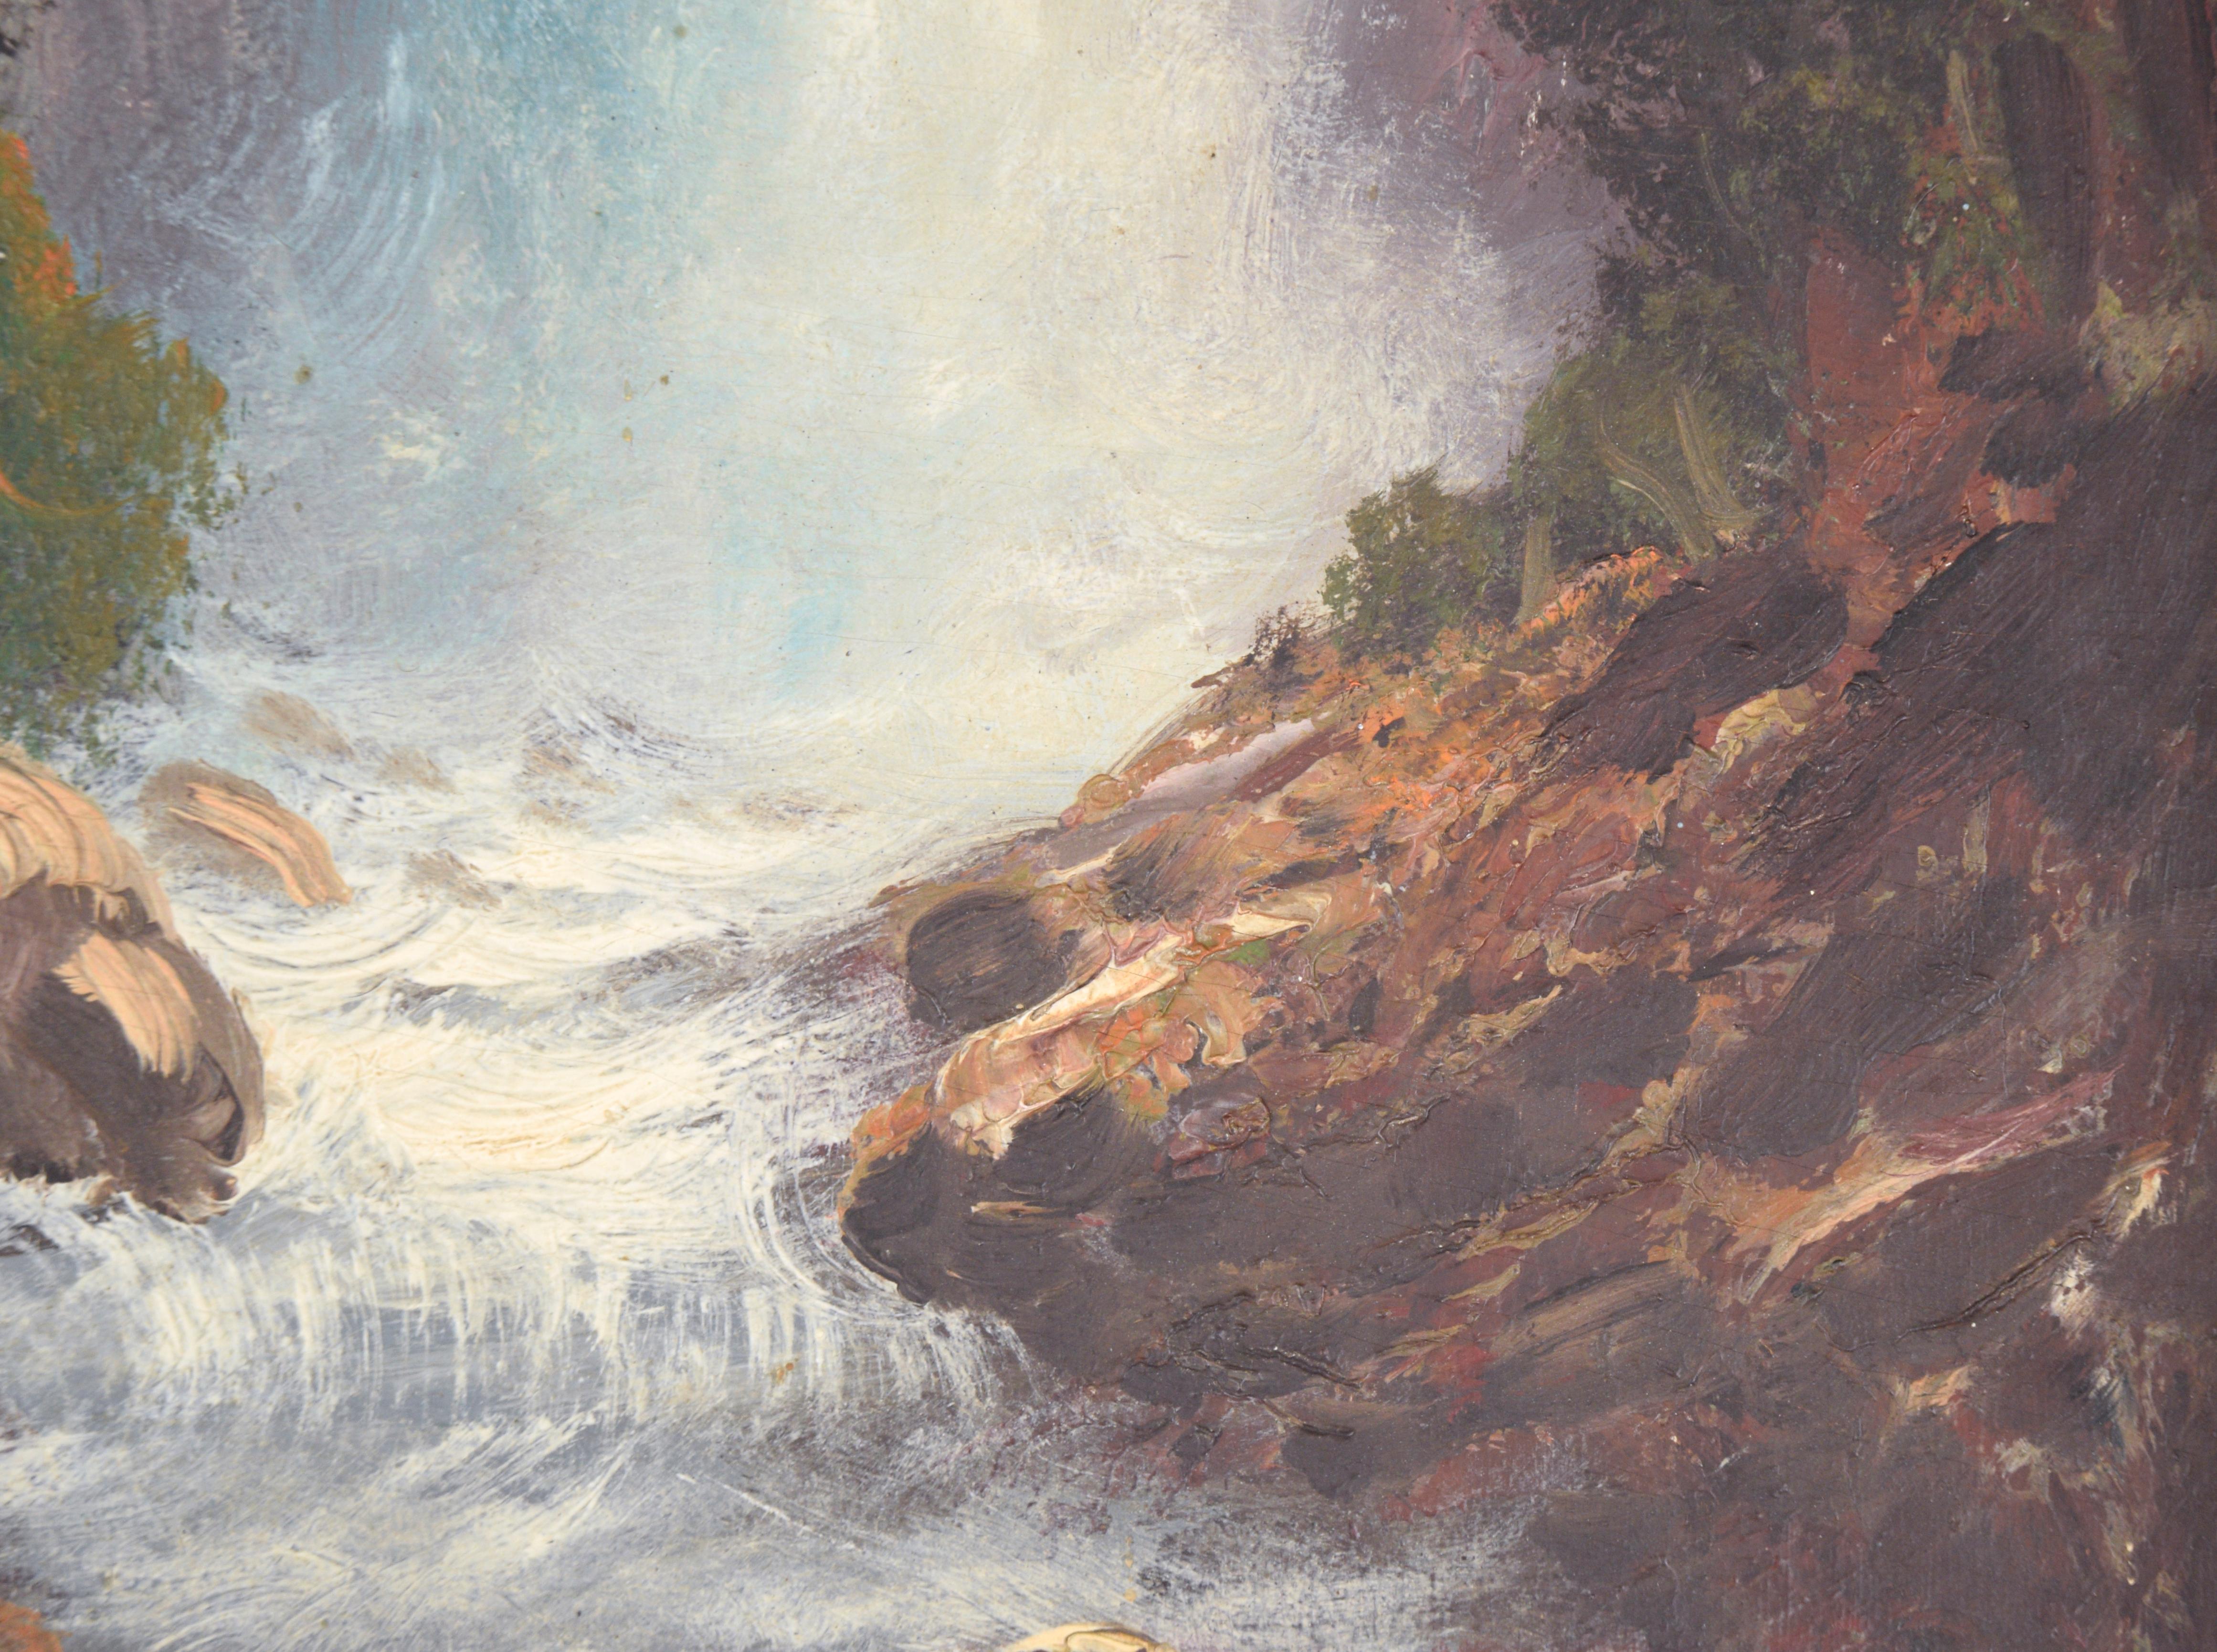 Vernal Falls - Yosemite Waterfall Landscape by John Englehart - American Impressionist Painting by John Joseph Englehart